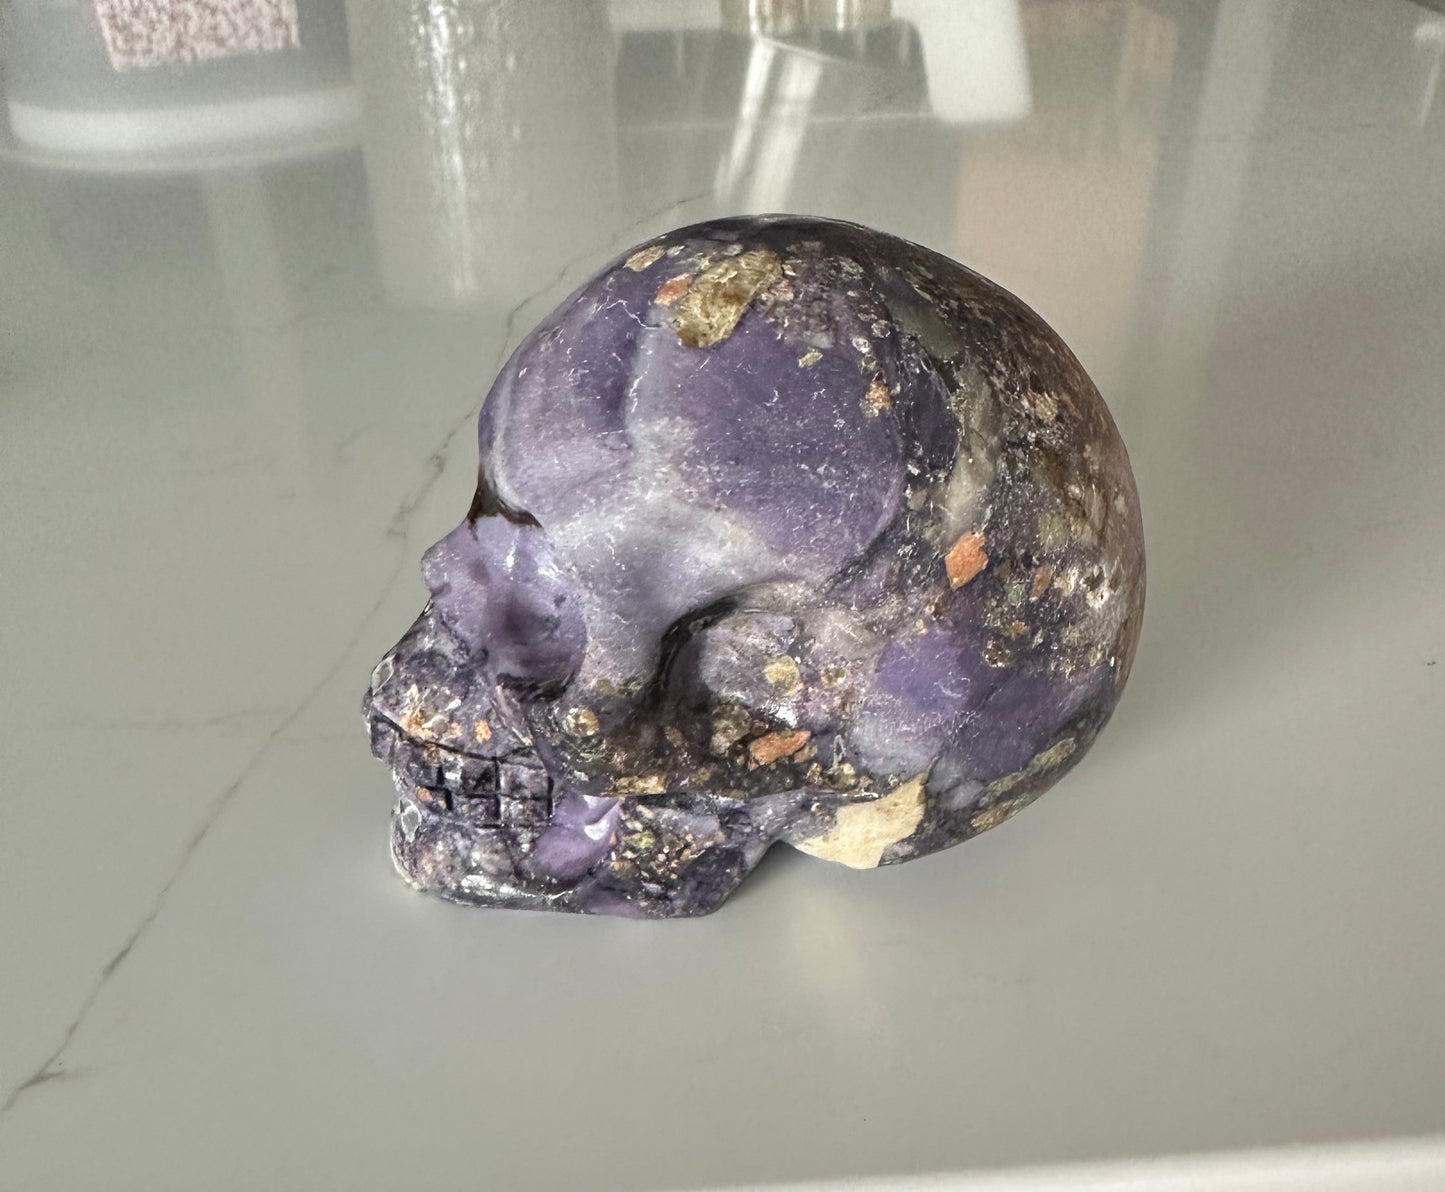 Root Fluorite Skull